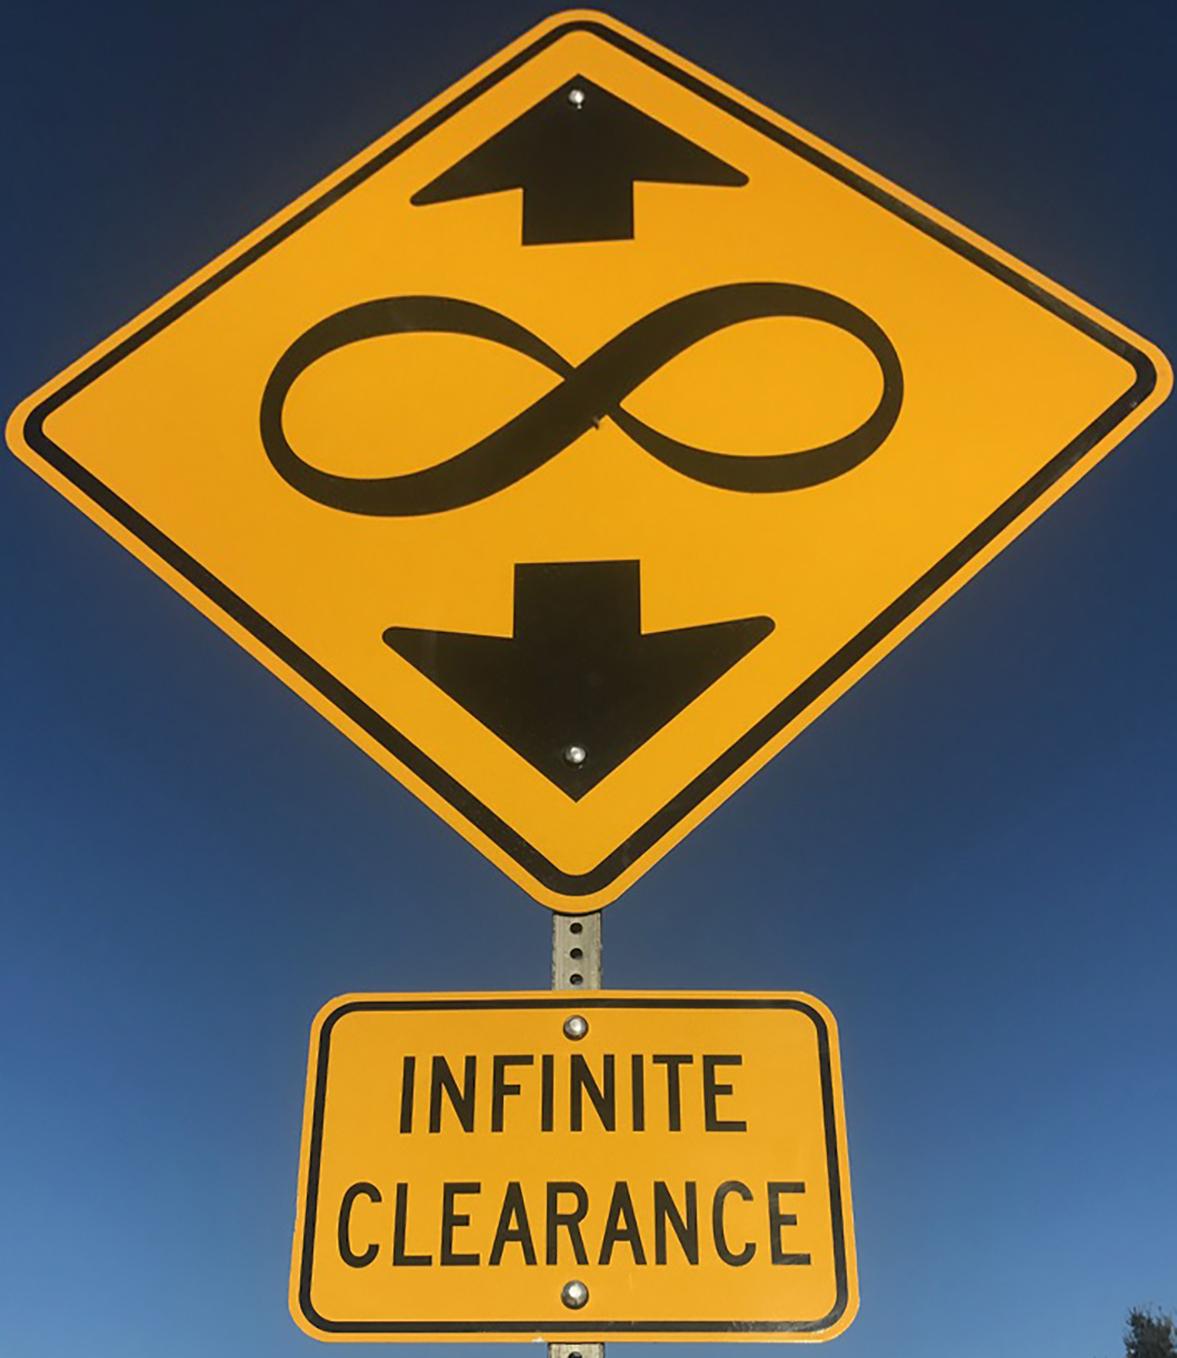 "Infinite Clearance" - Contemporary Street Sign Sculpture - Mixed Media Art by Scott Froschauer